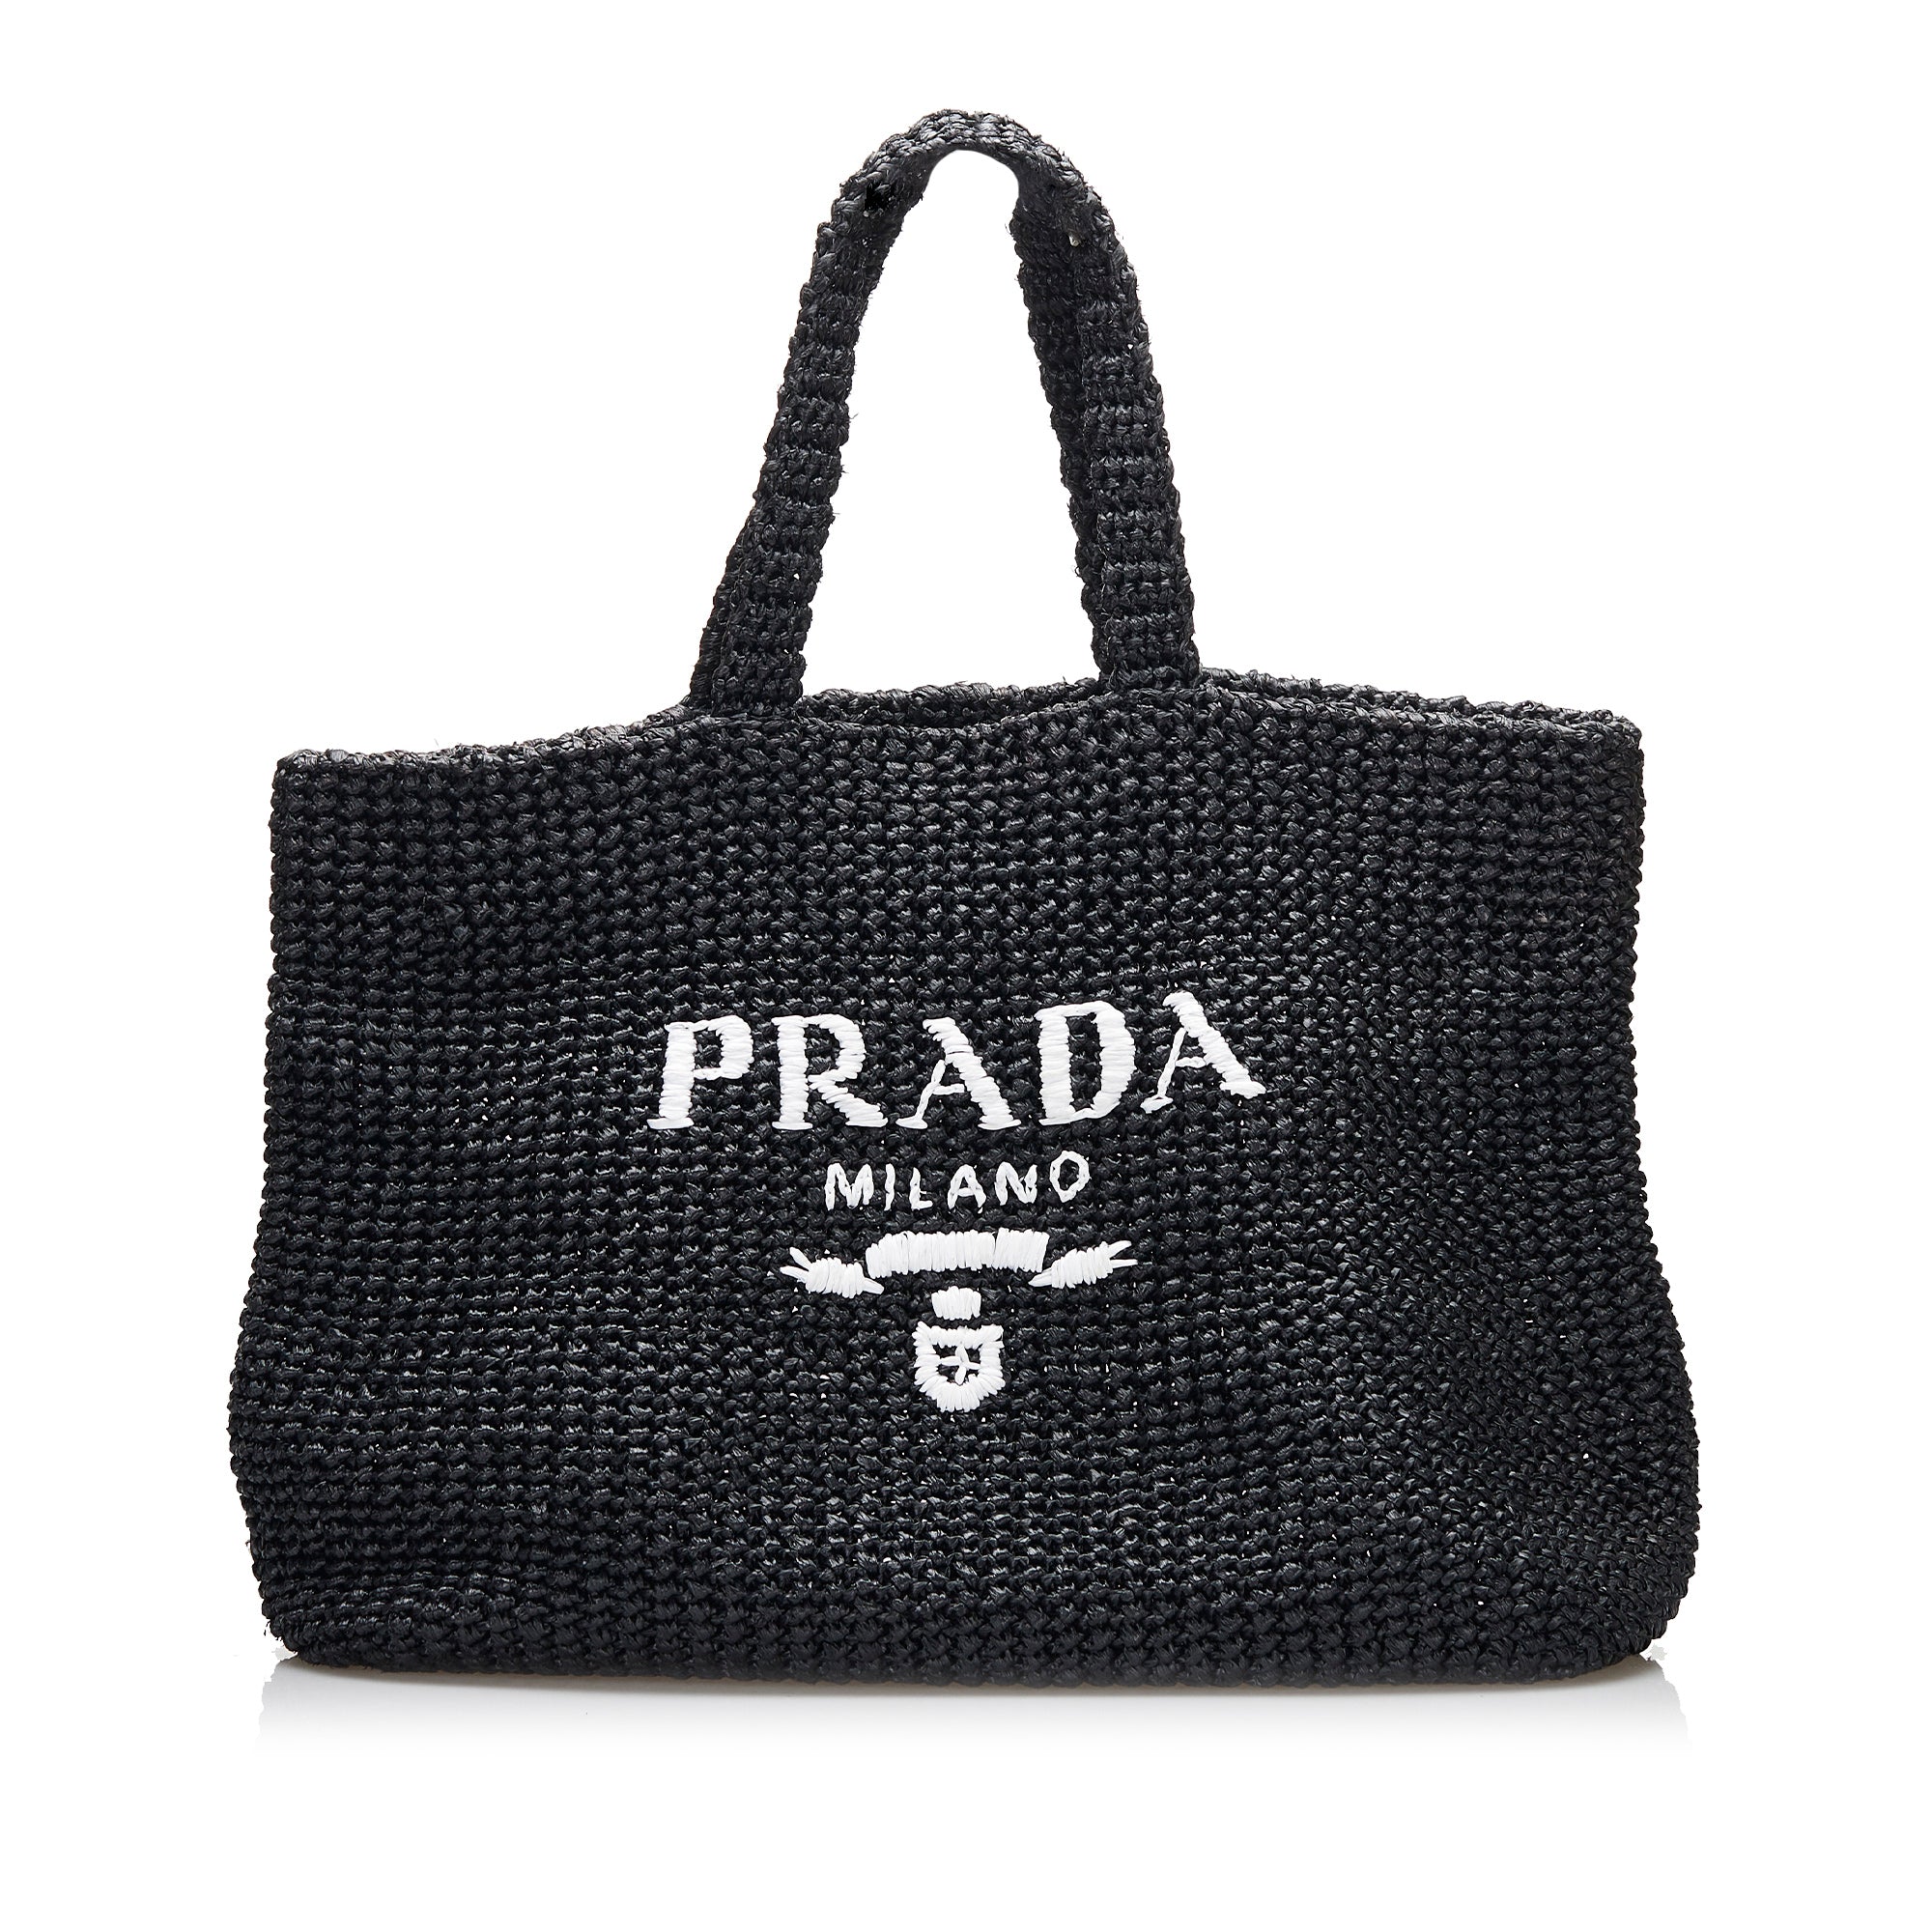 PRADA *Prada Raffia Tote Bag Large Black - Vault 55